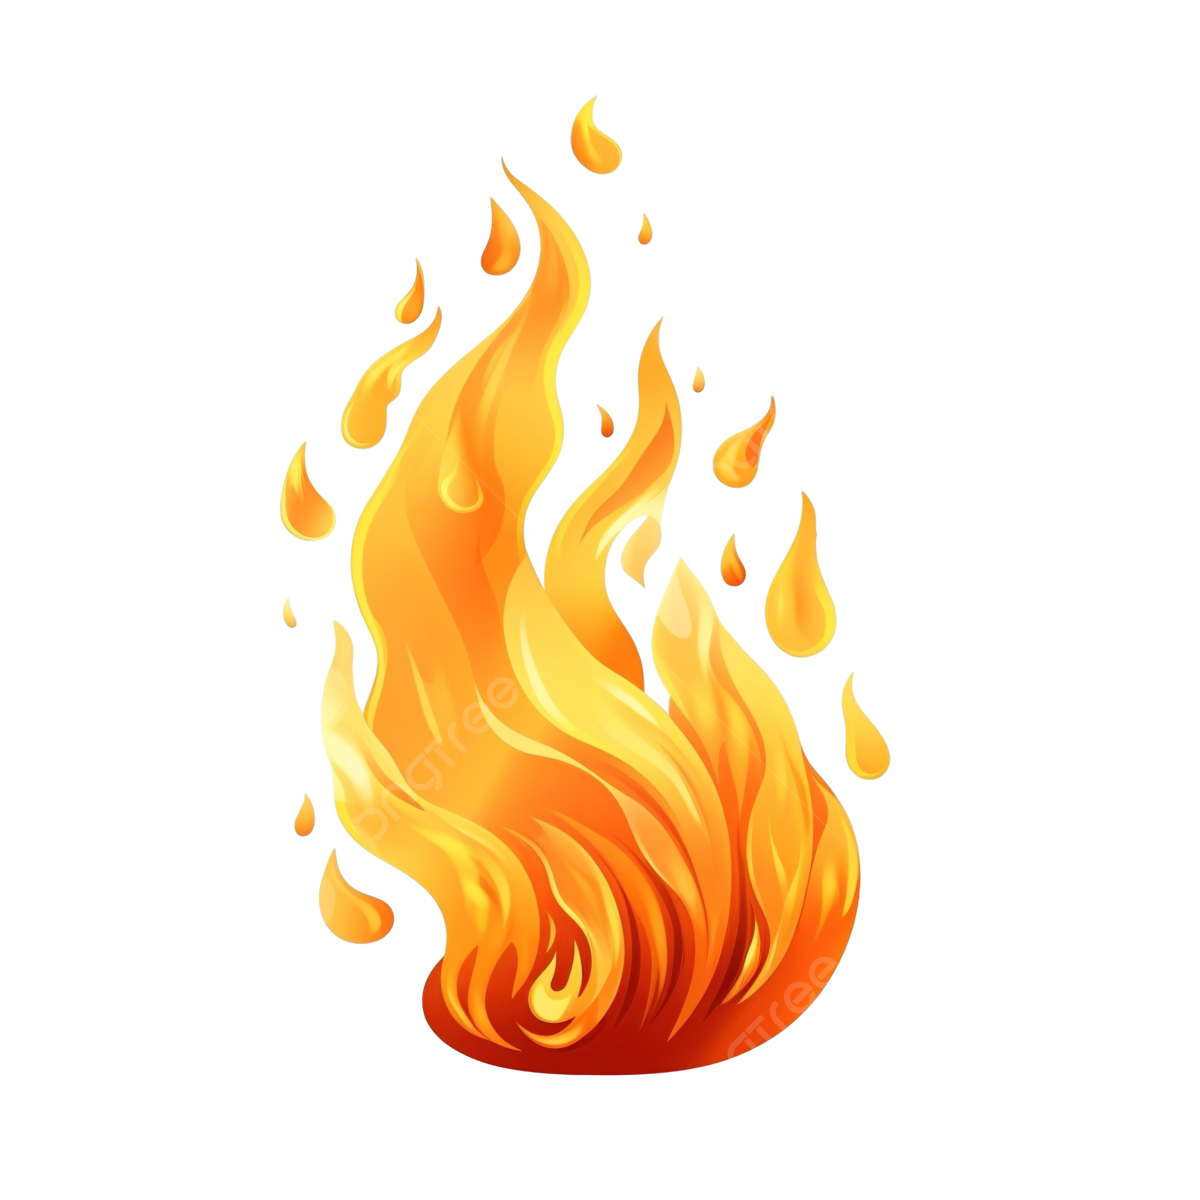 files/pngtree-illustration-of-burning-fire-flame-png-image_13344067.png